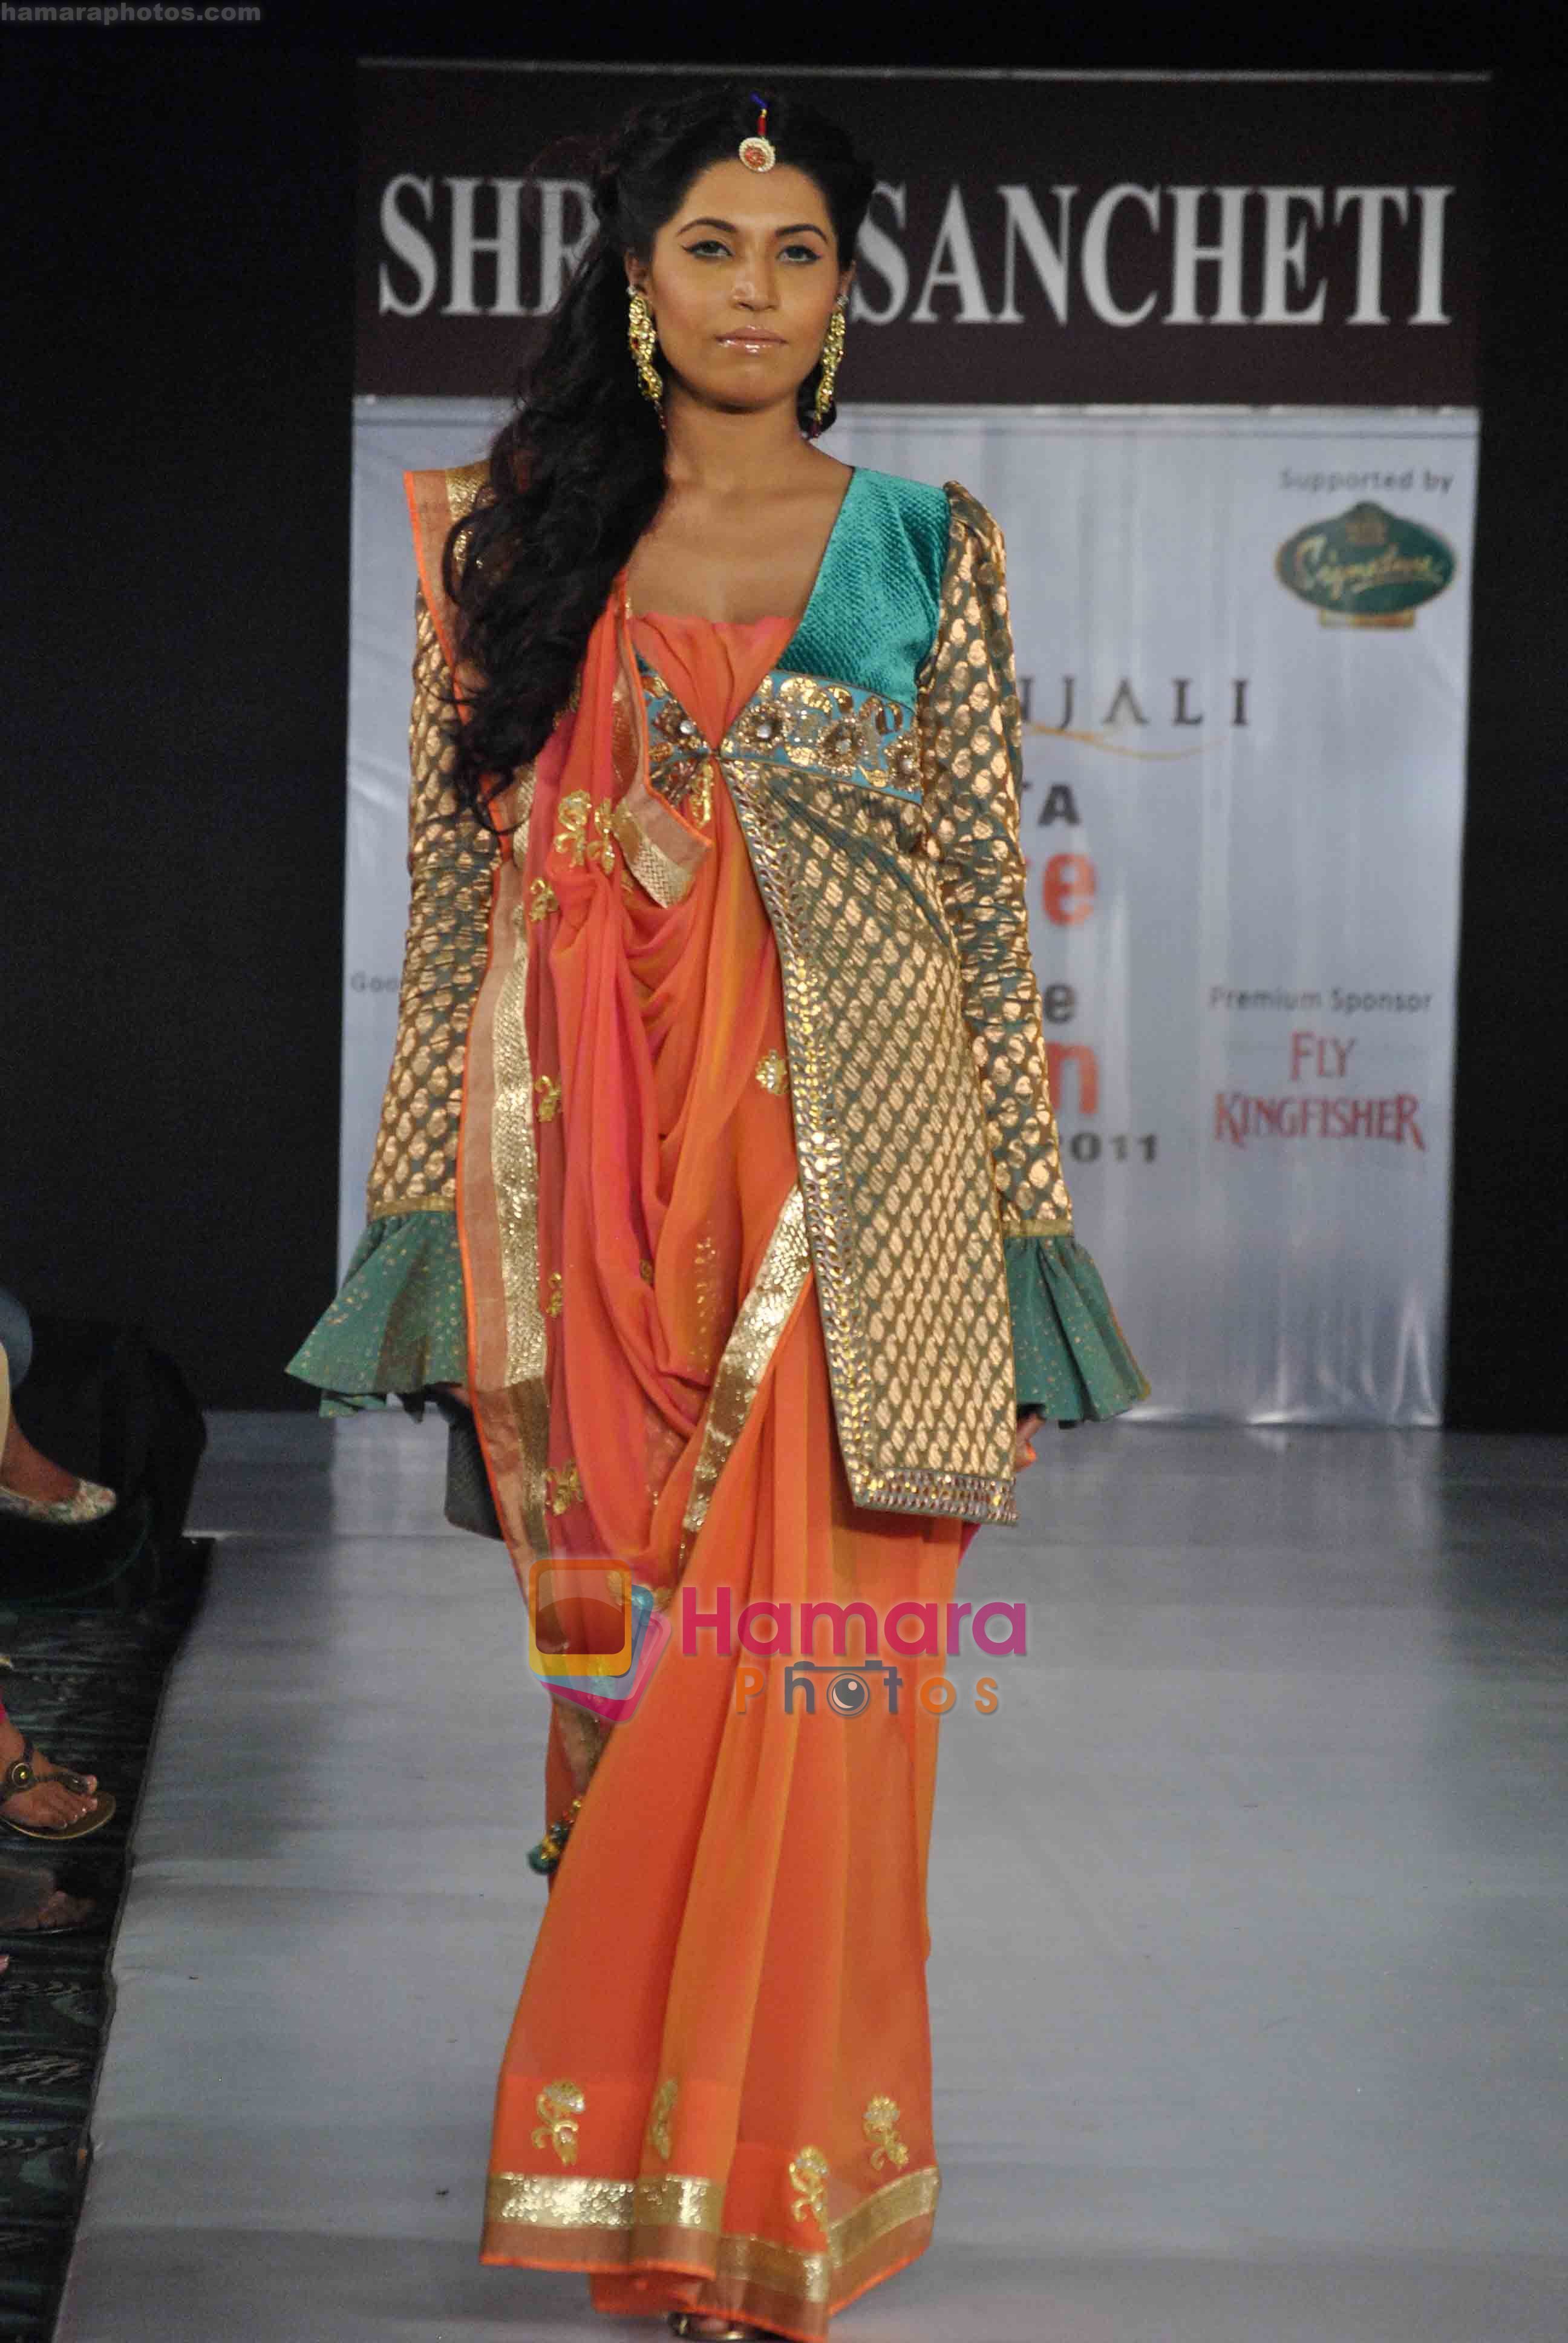 Model walk the ramp for Shruti Sancheti of PINNACLE at the Kolkata Couture Lifestyle Fashion Week on the 17th of April 2011 